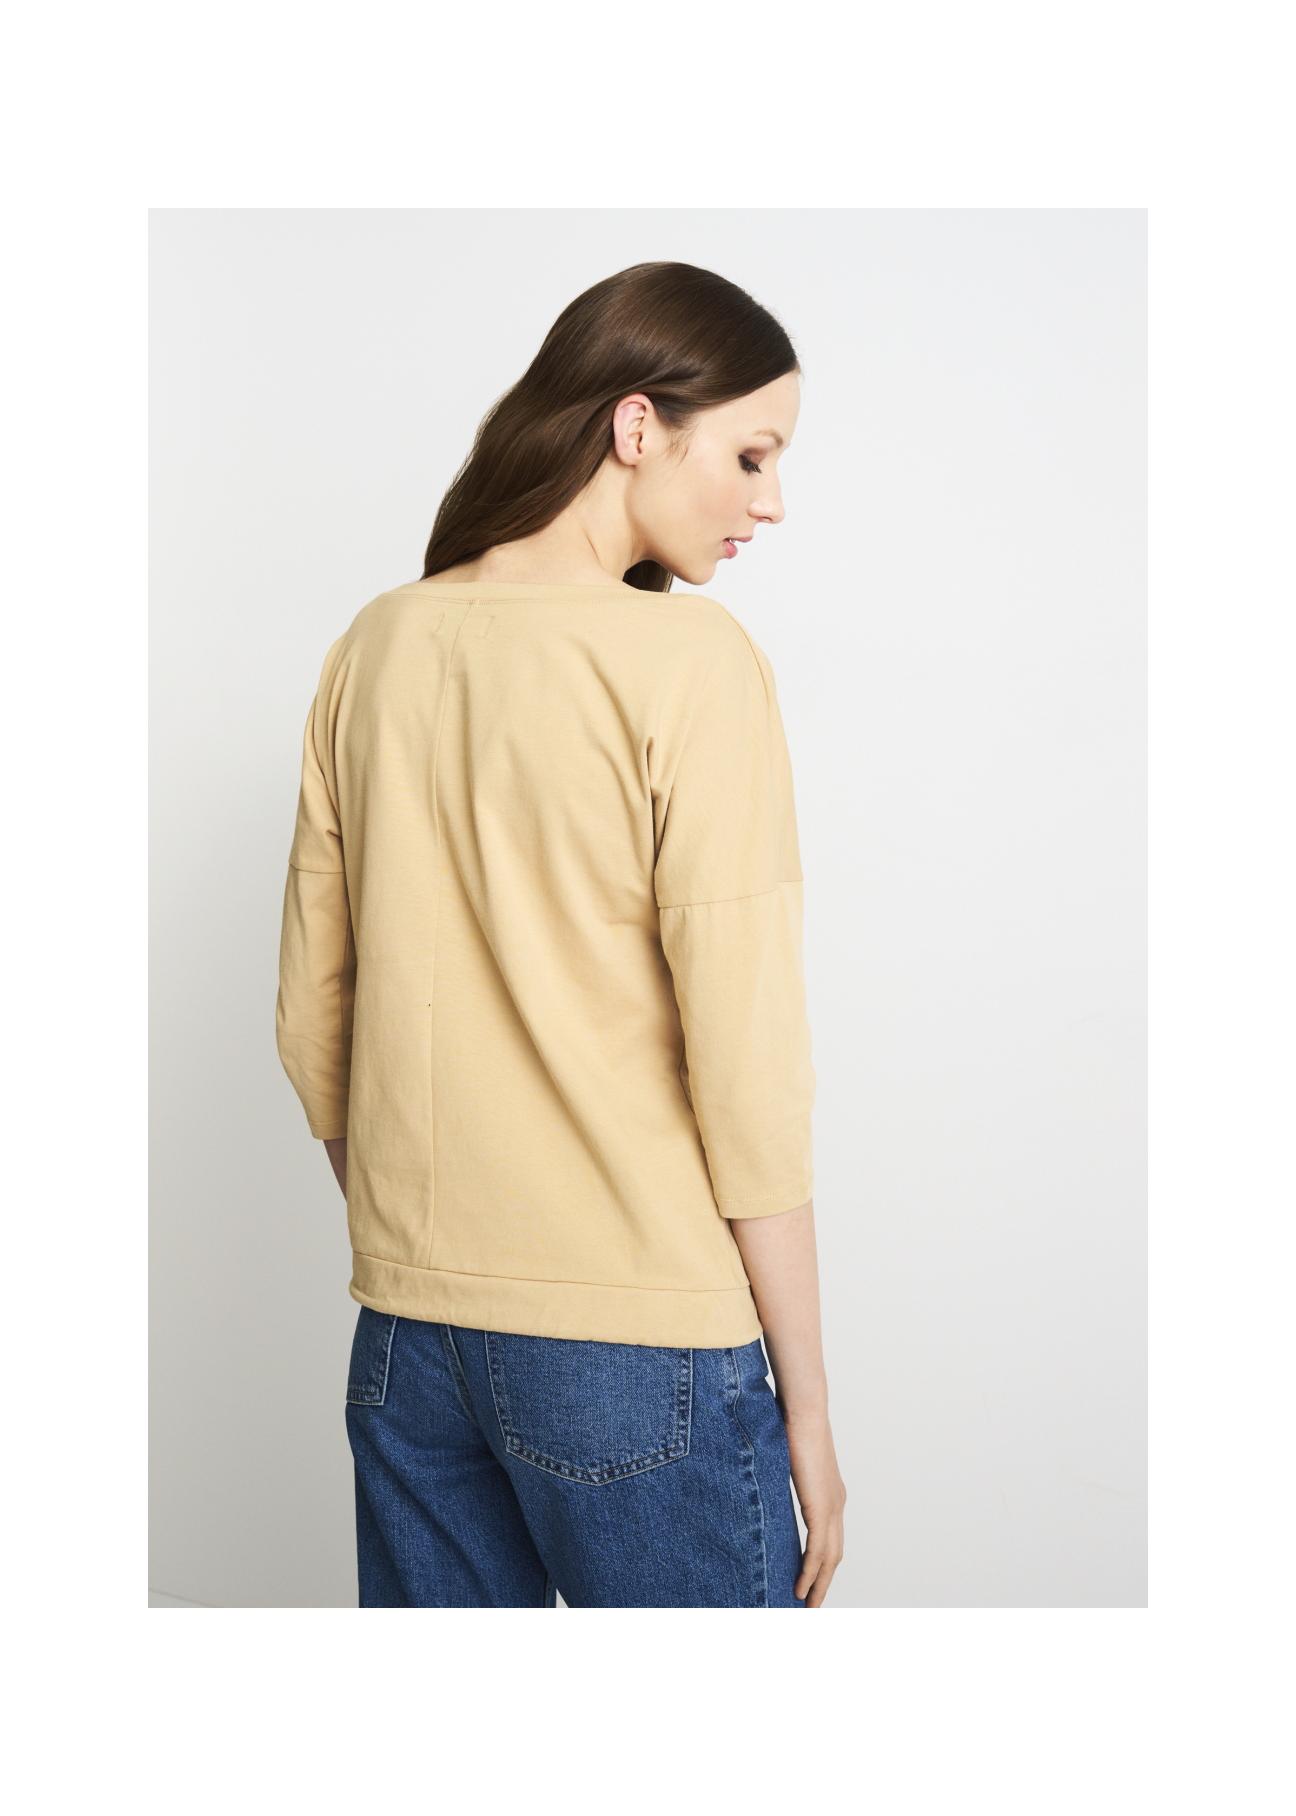 Beżowa bluzka damska z logo OCHNIK BLUDT-0146-80(W22)